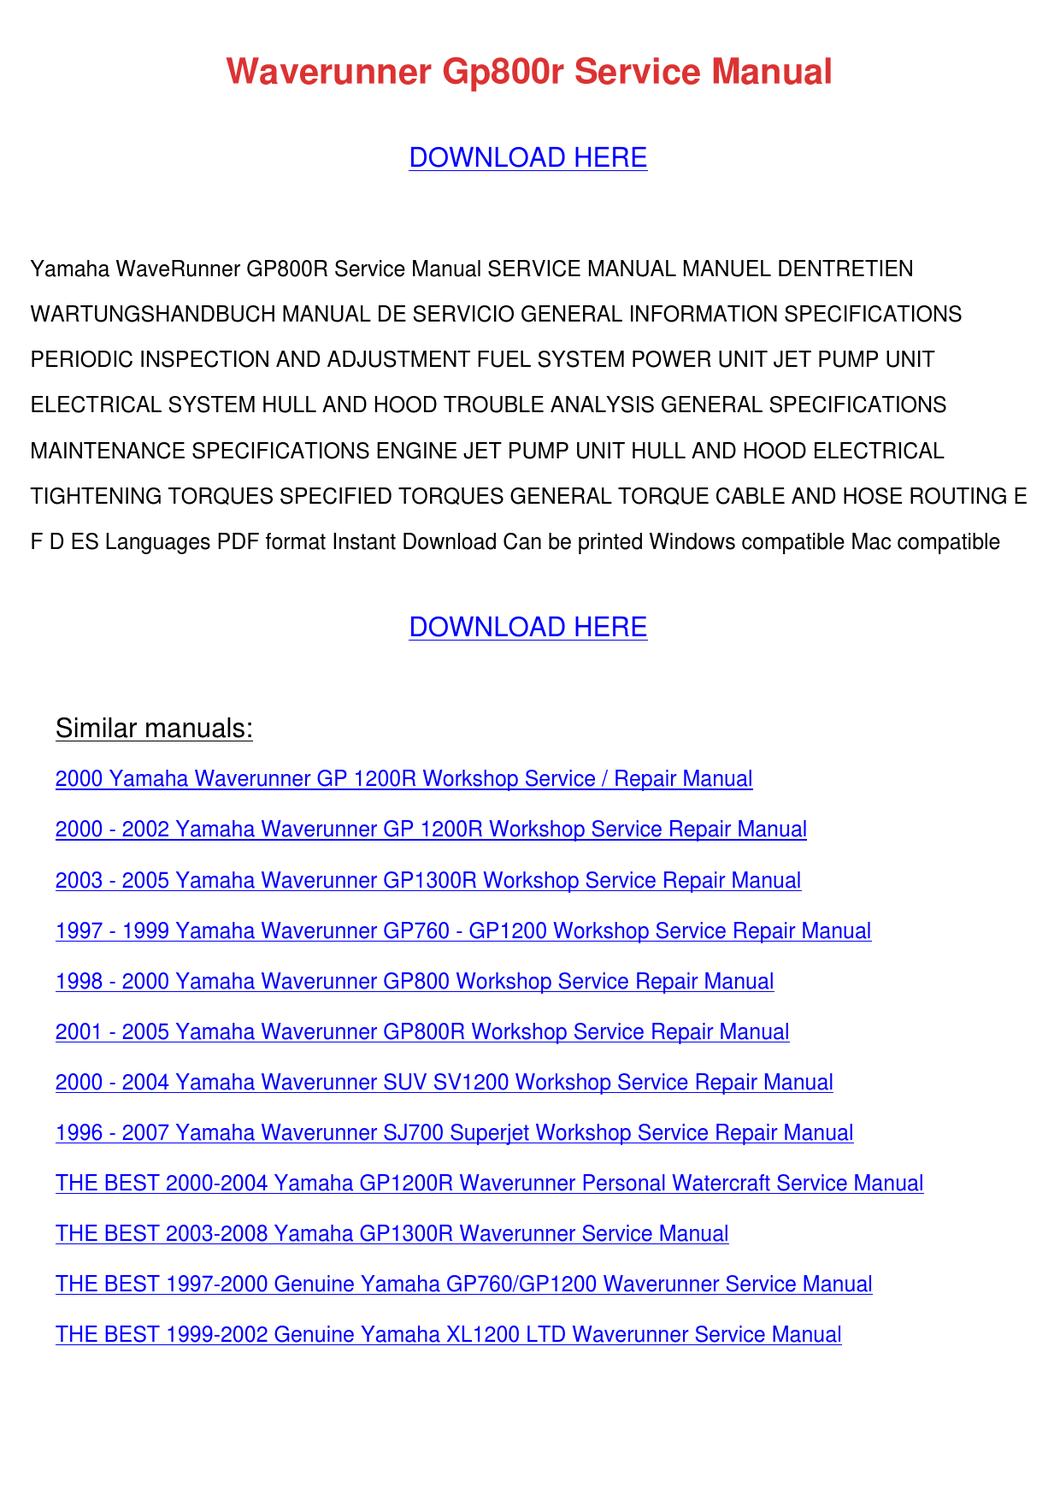 1997 Yamaha Waverunner Owners Manual